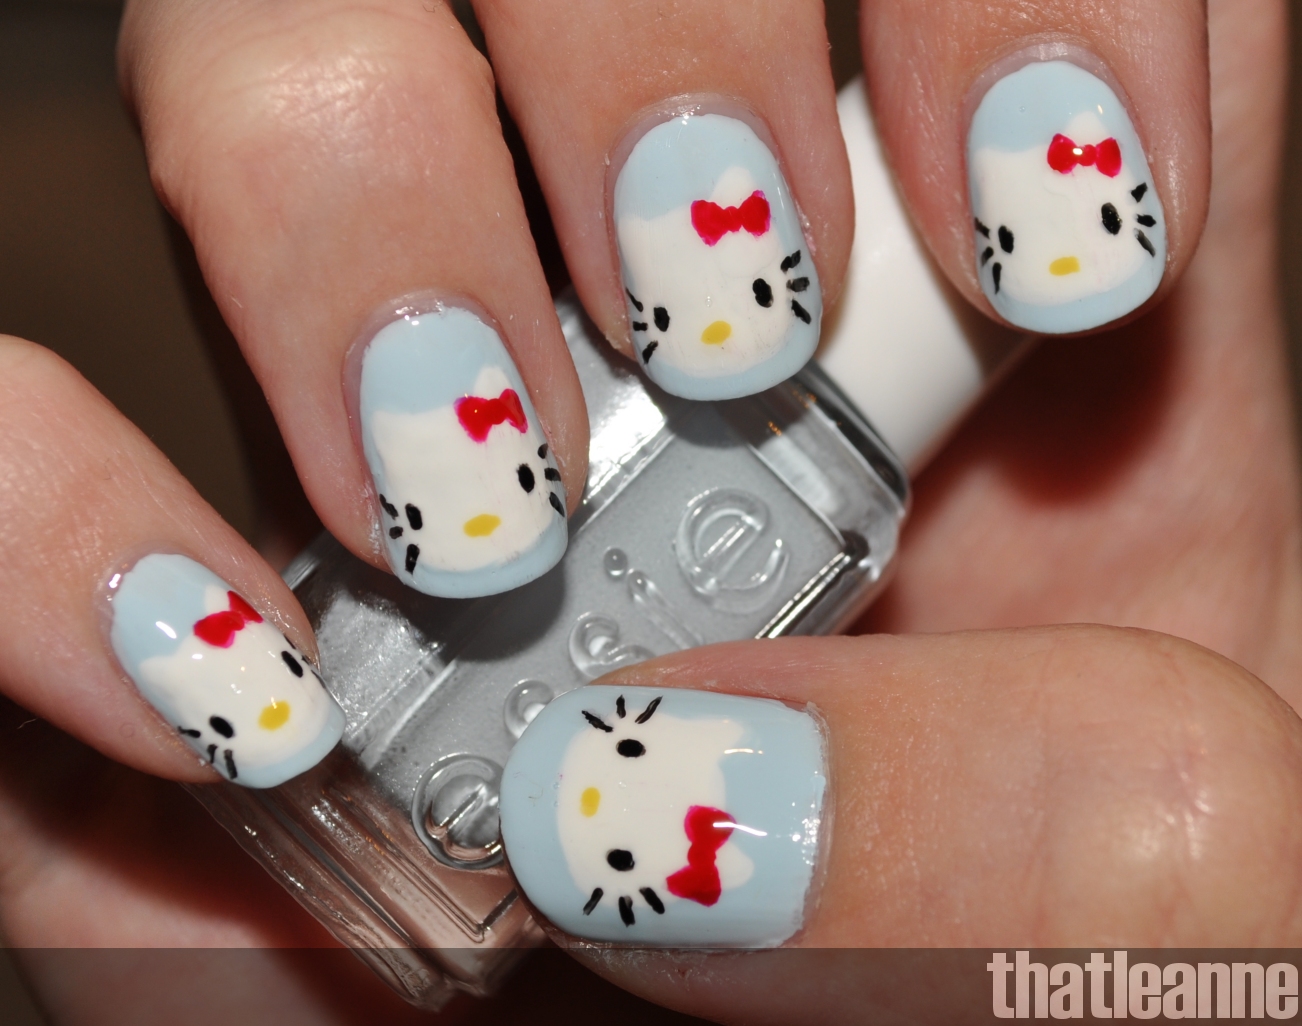 Hello Kitty Nail Art Designs - wide 1